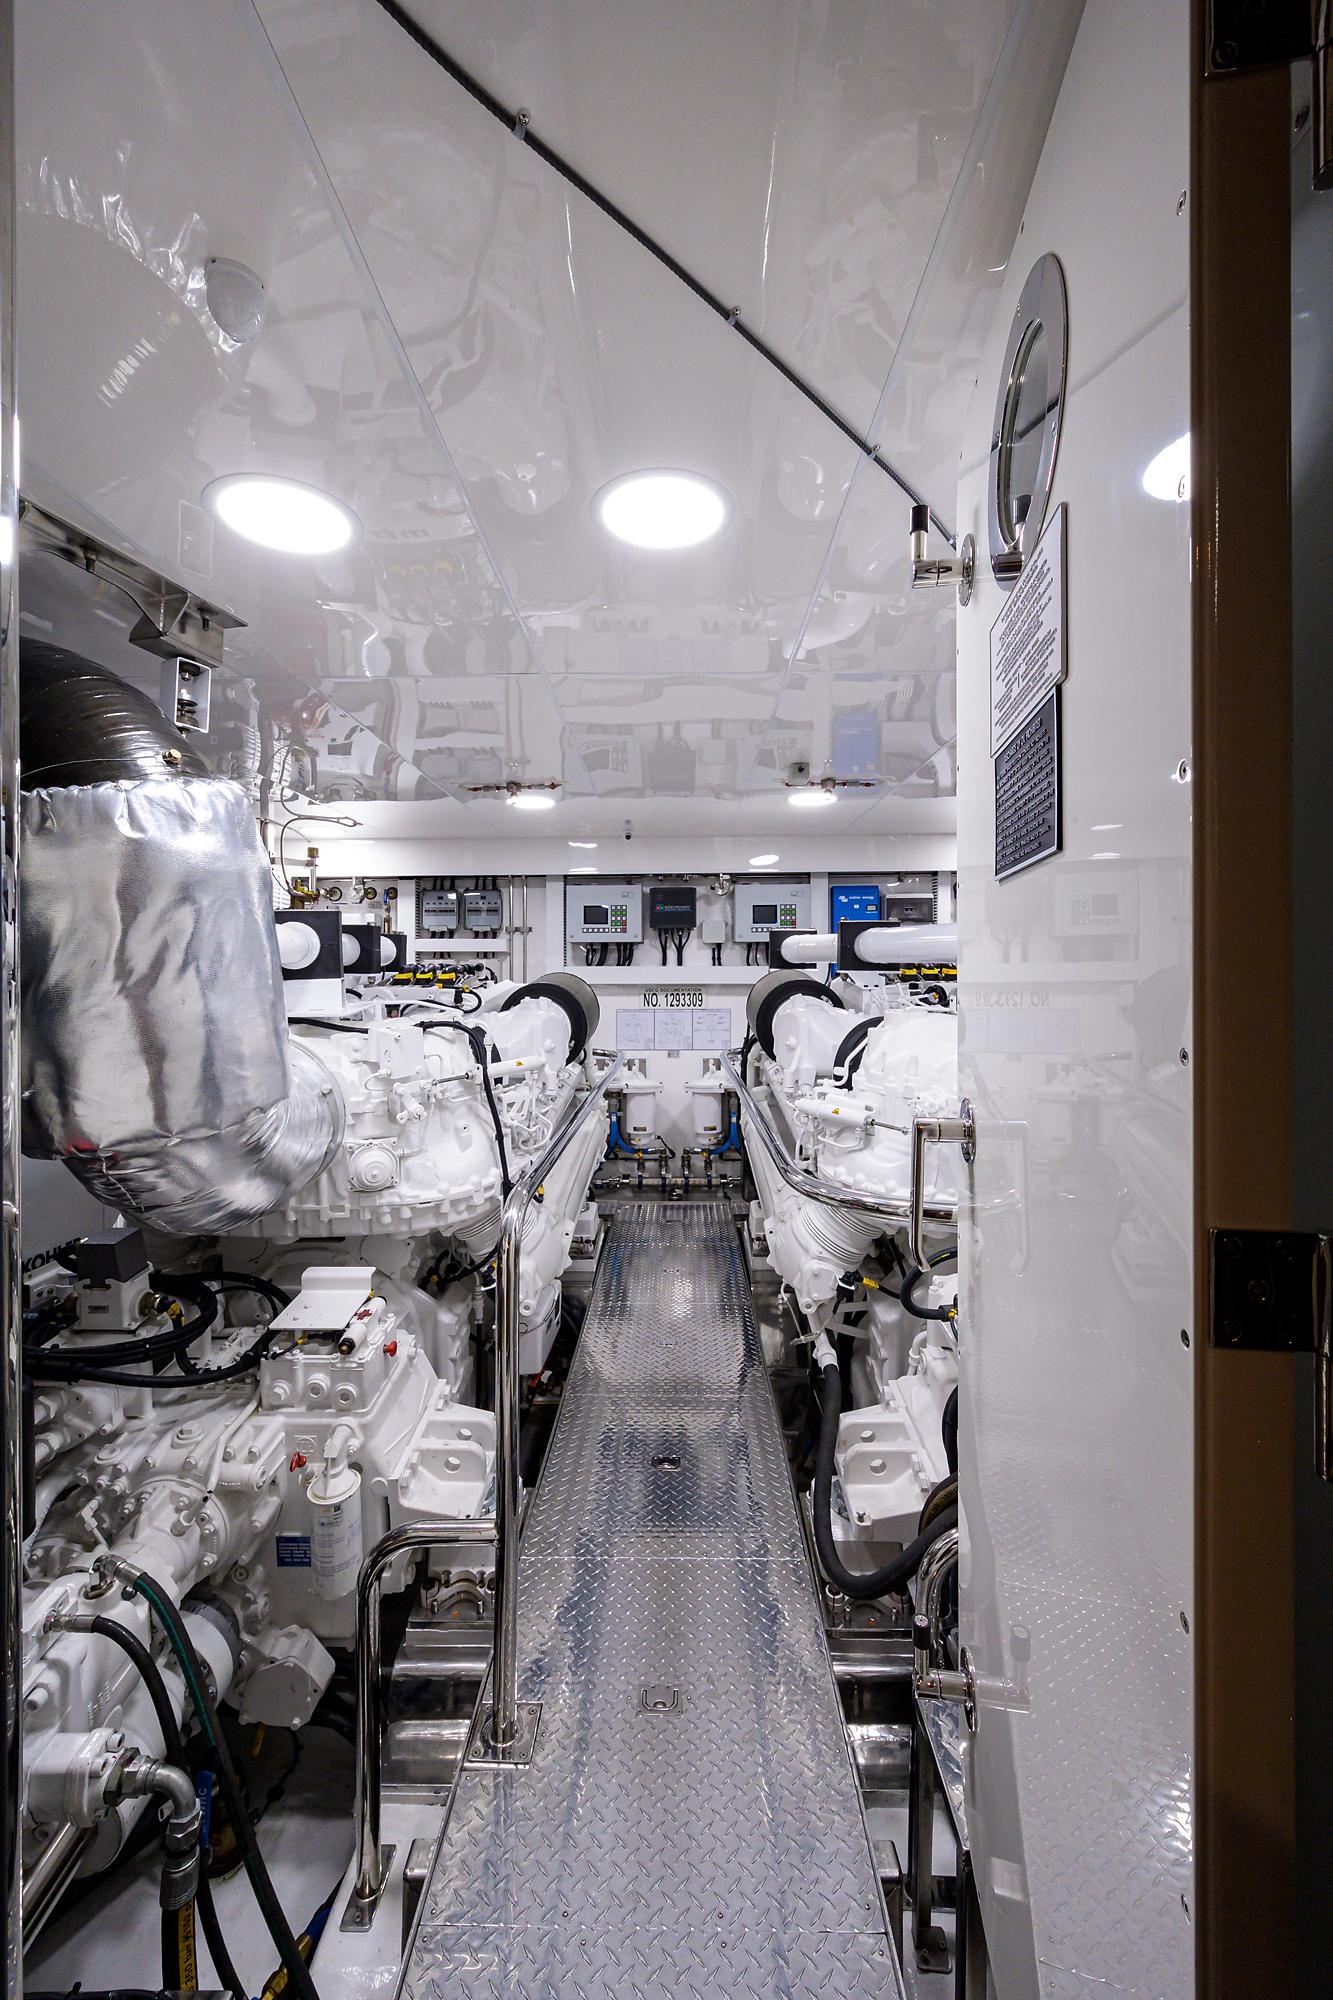 Ocean Alexander 100 Zephyr-Engine Room